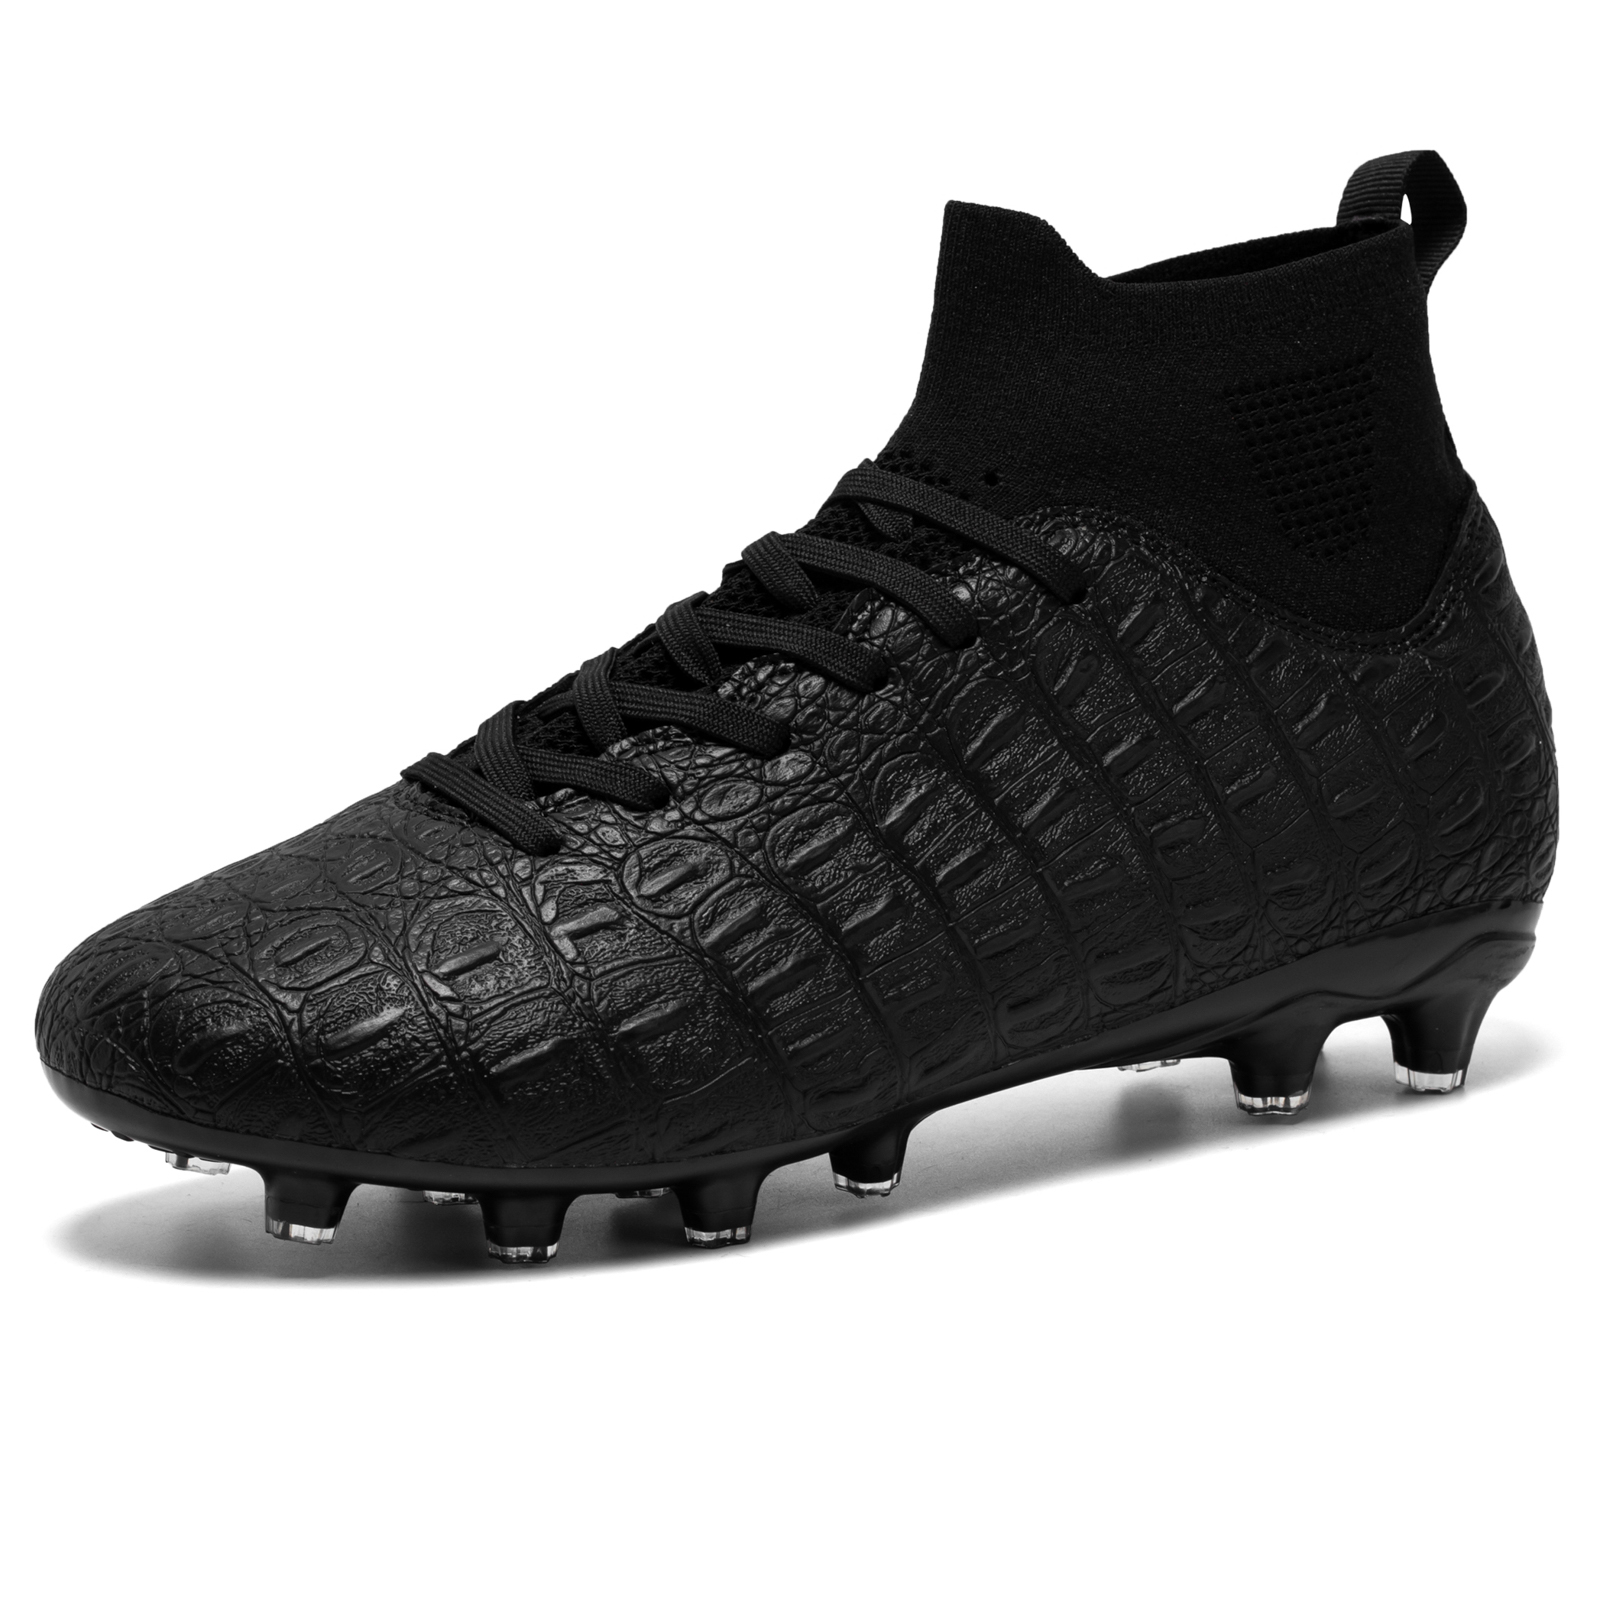 Men’s Professional TPU Outsole Soccer Shoes Football Shoe for Men